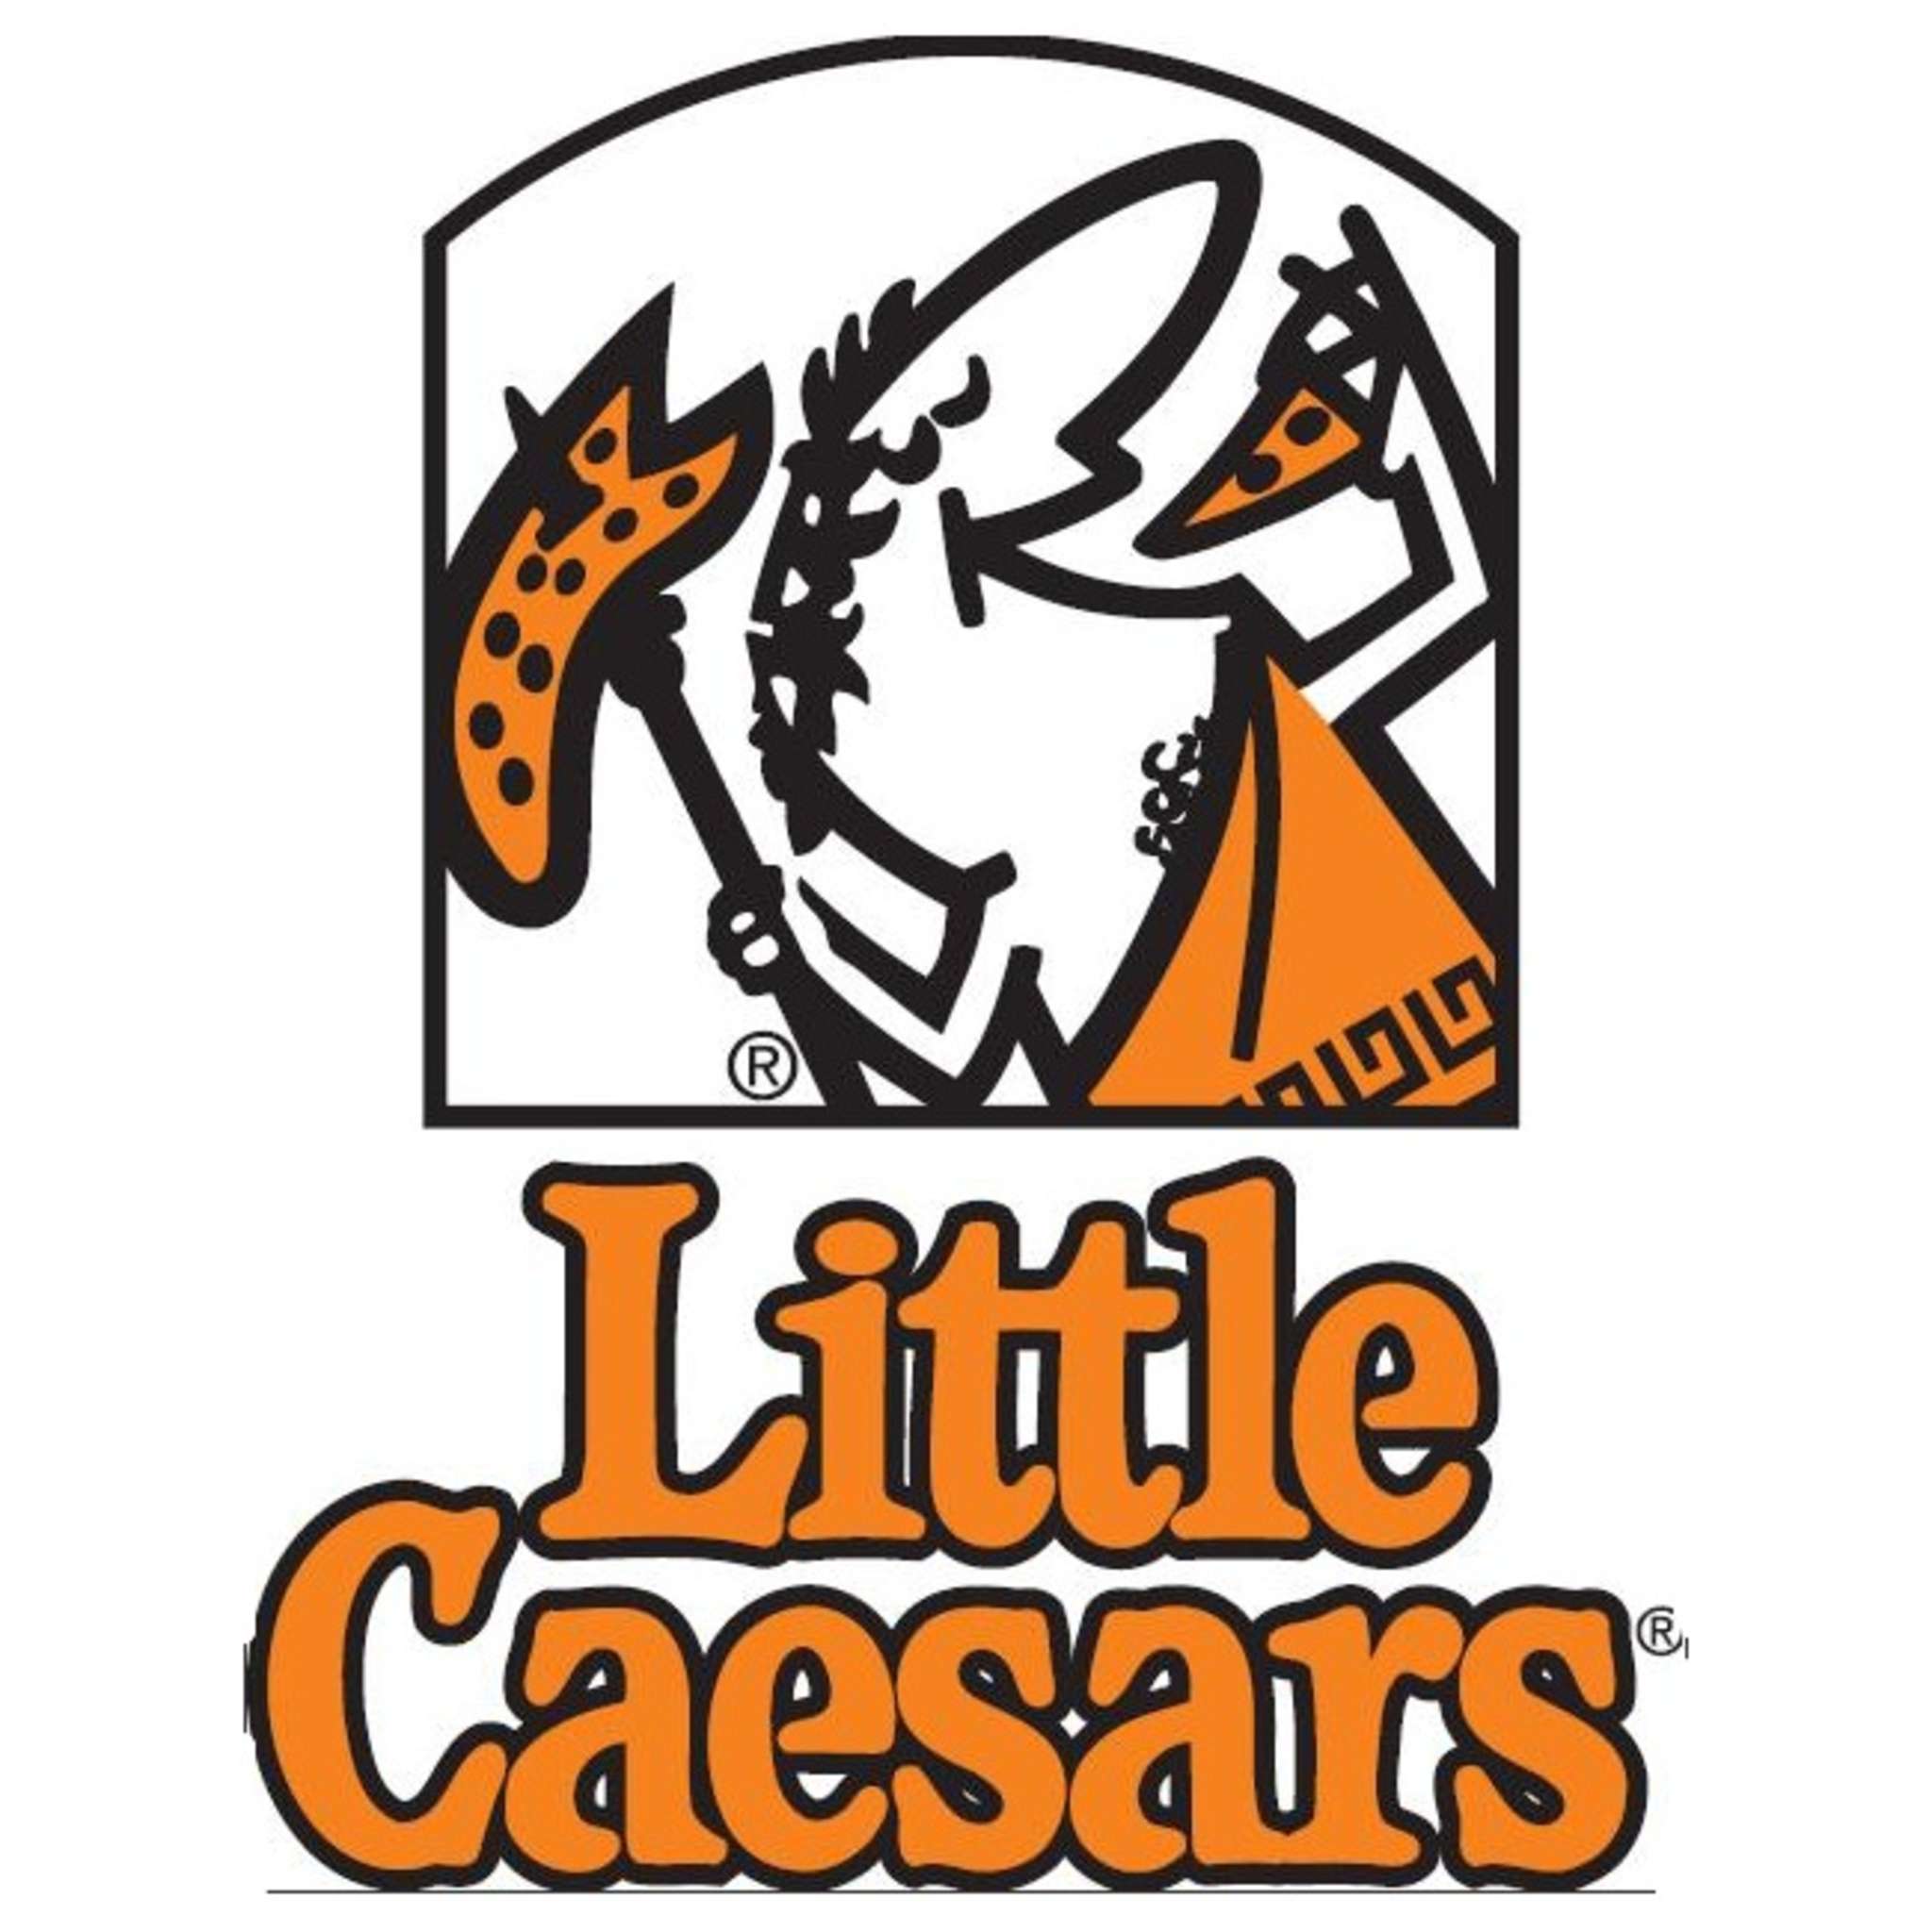 Little Ceasars Logo - Little caesars pizza Logos